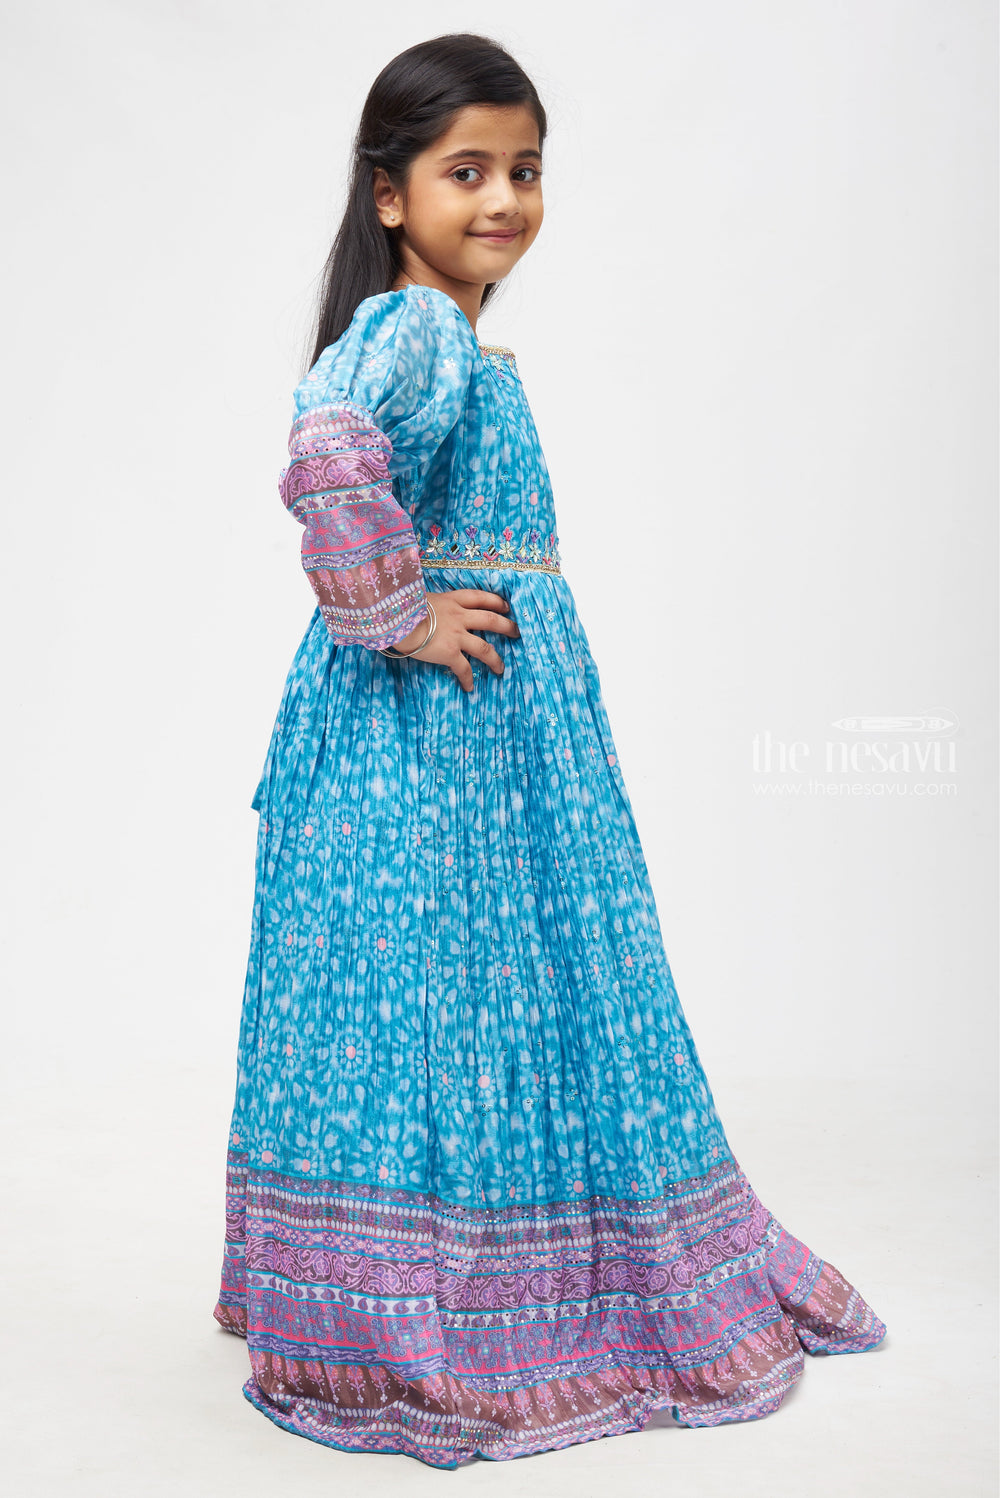 The Nesavu Girls Party Gown Azure Blooms: Stone Embroidered Floral Blue Anarkali for Girls- Premium Designer Dress Collections Nesavu Festive Diwali Anarkali Outfit | Kid’s Stylish Anarkali Dress | The Nesavu